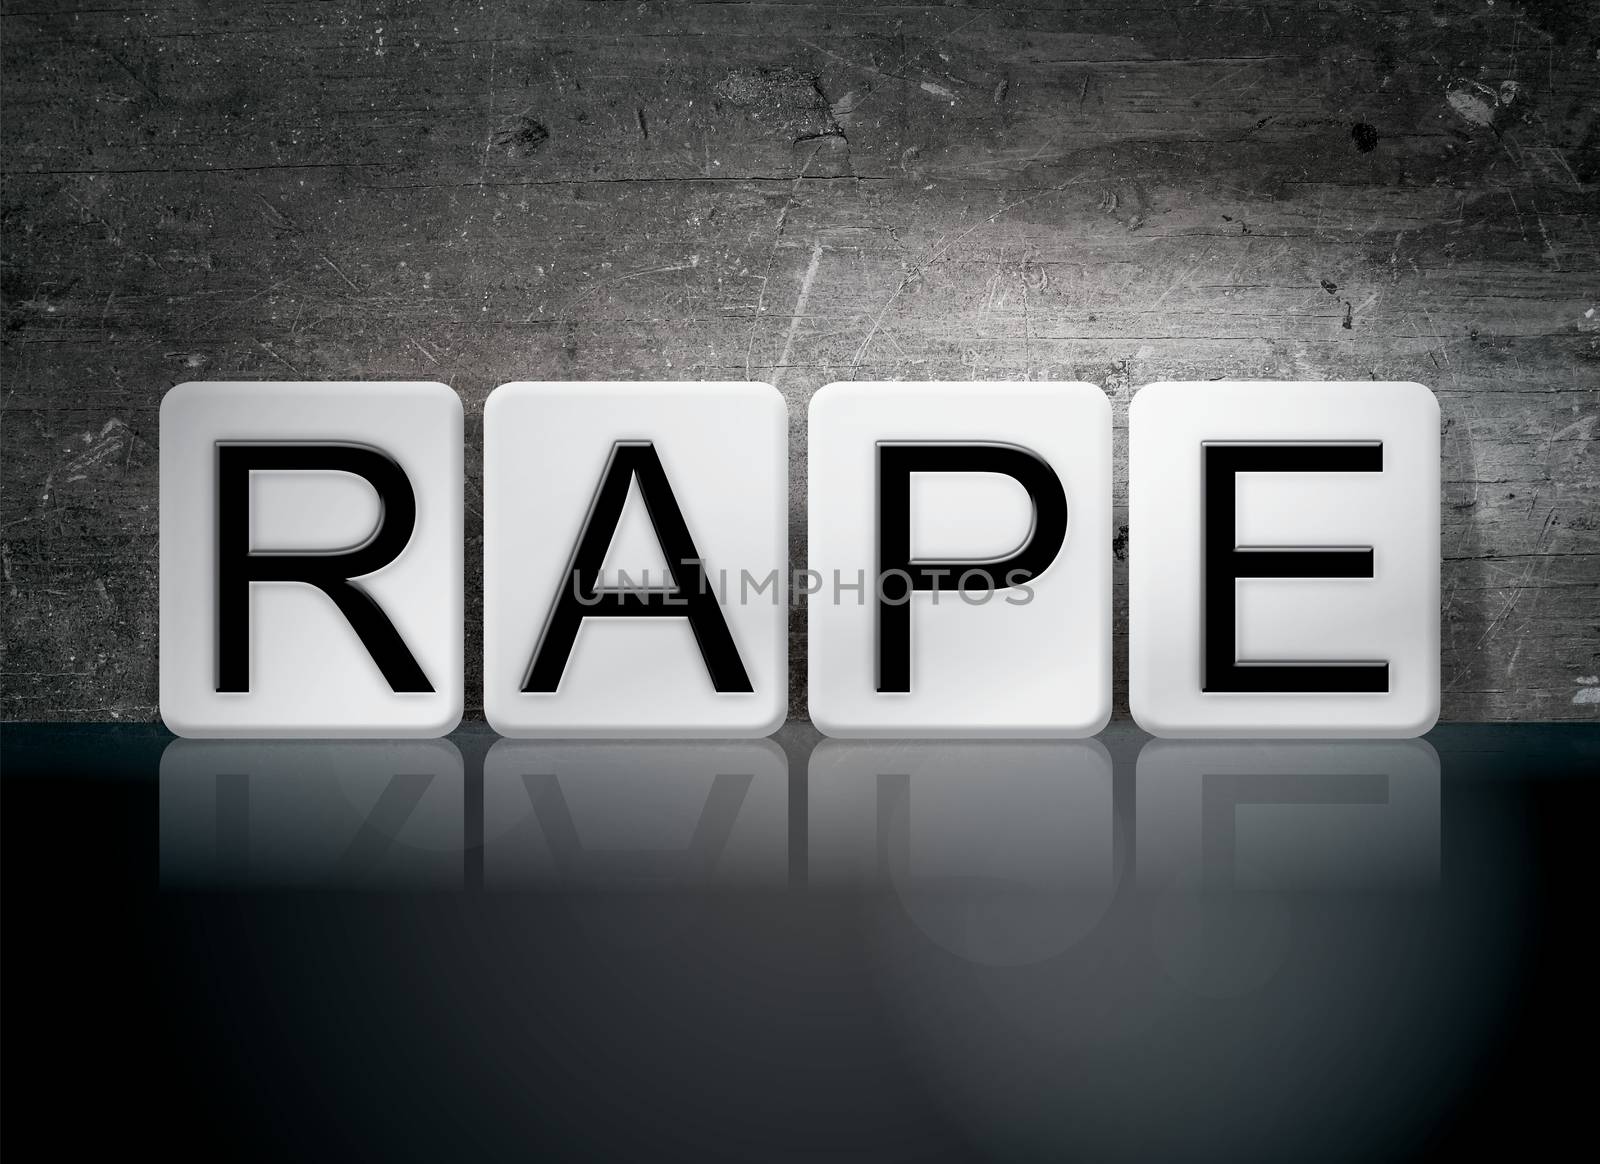 The word "Rape" written in white tiles against a dark vintage grunge background.